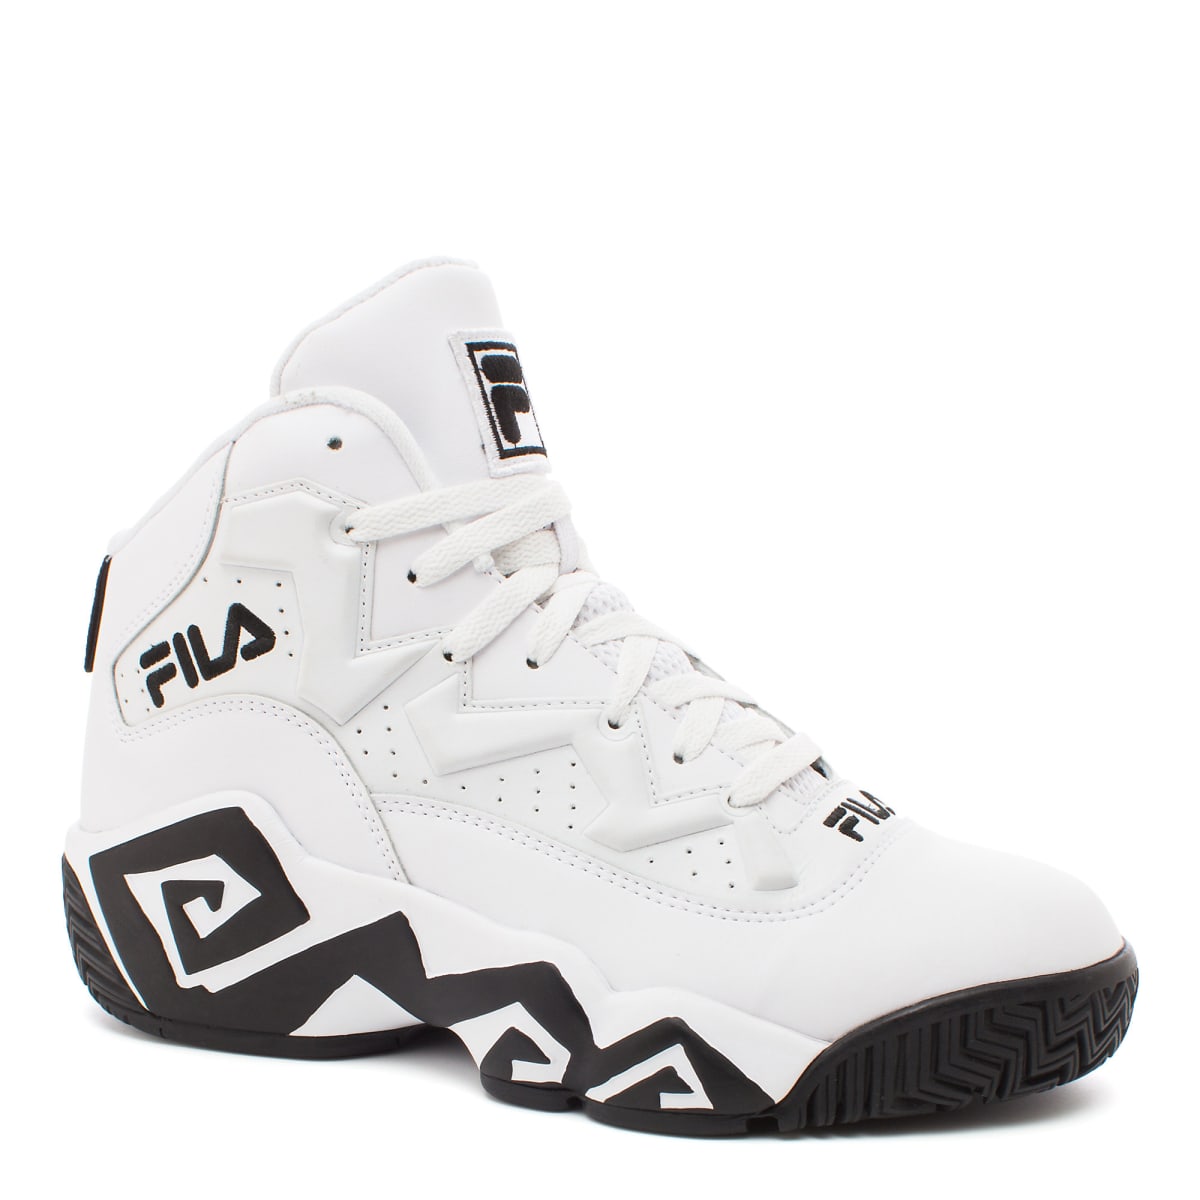 Fila MB (Mashburn I) | Fila | Sneaker News, Launches, Release Dates ...